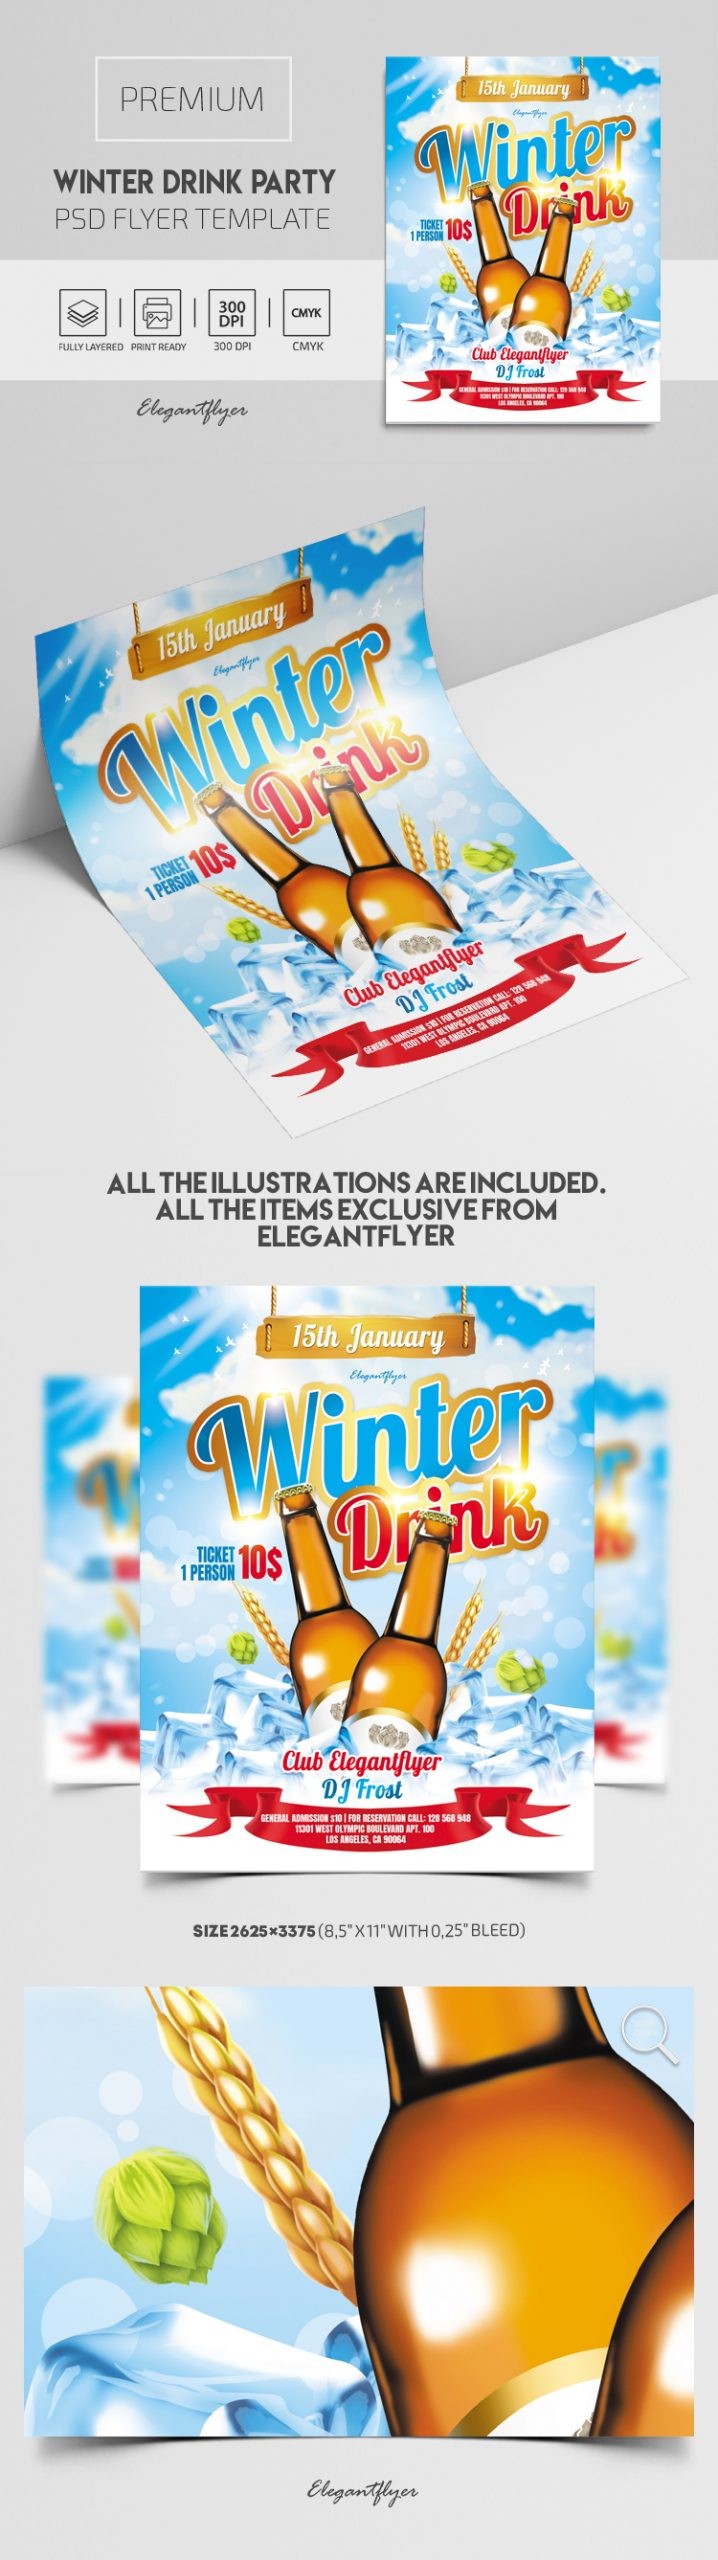 Winter Drink Party by ElegantFlyer